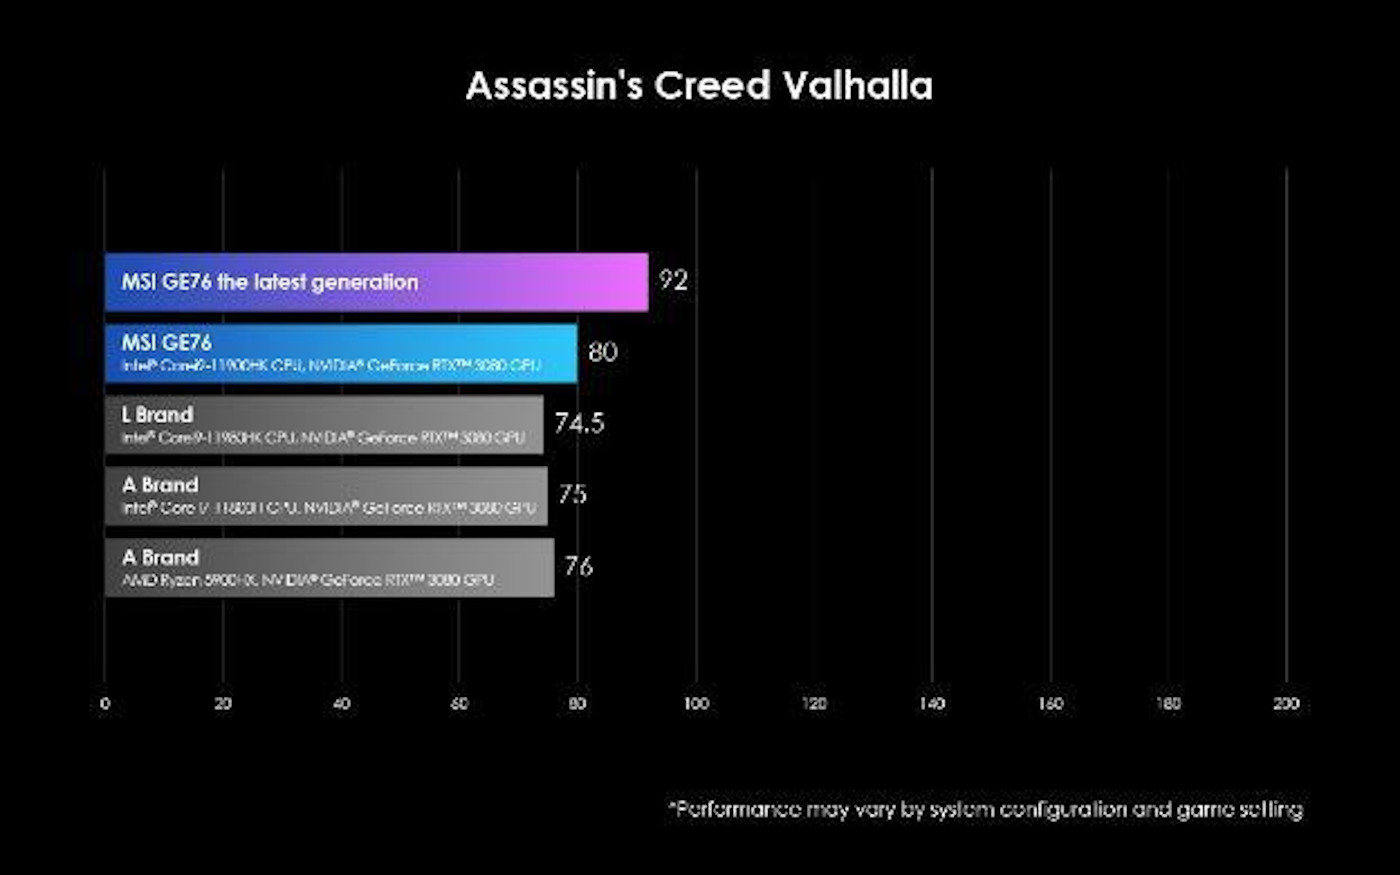 Assasins Creed Valhalla